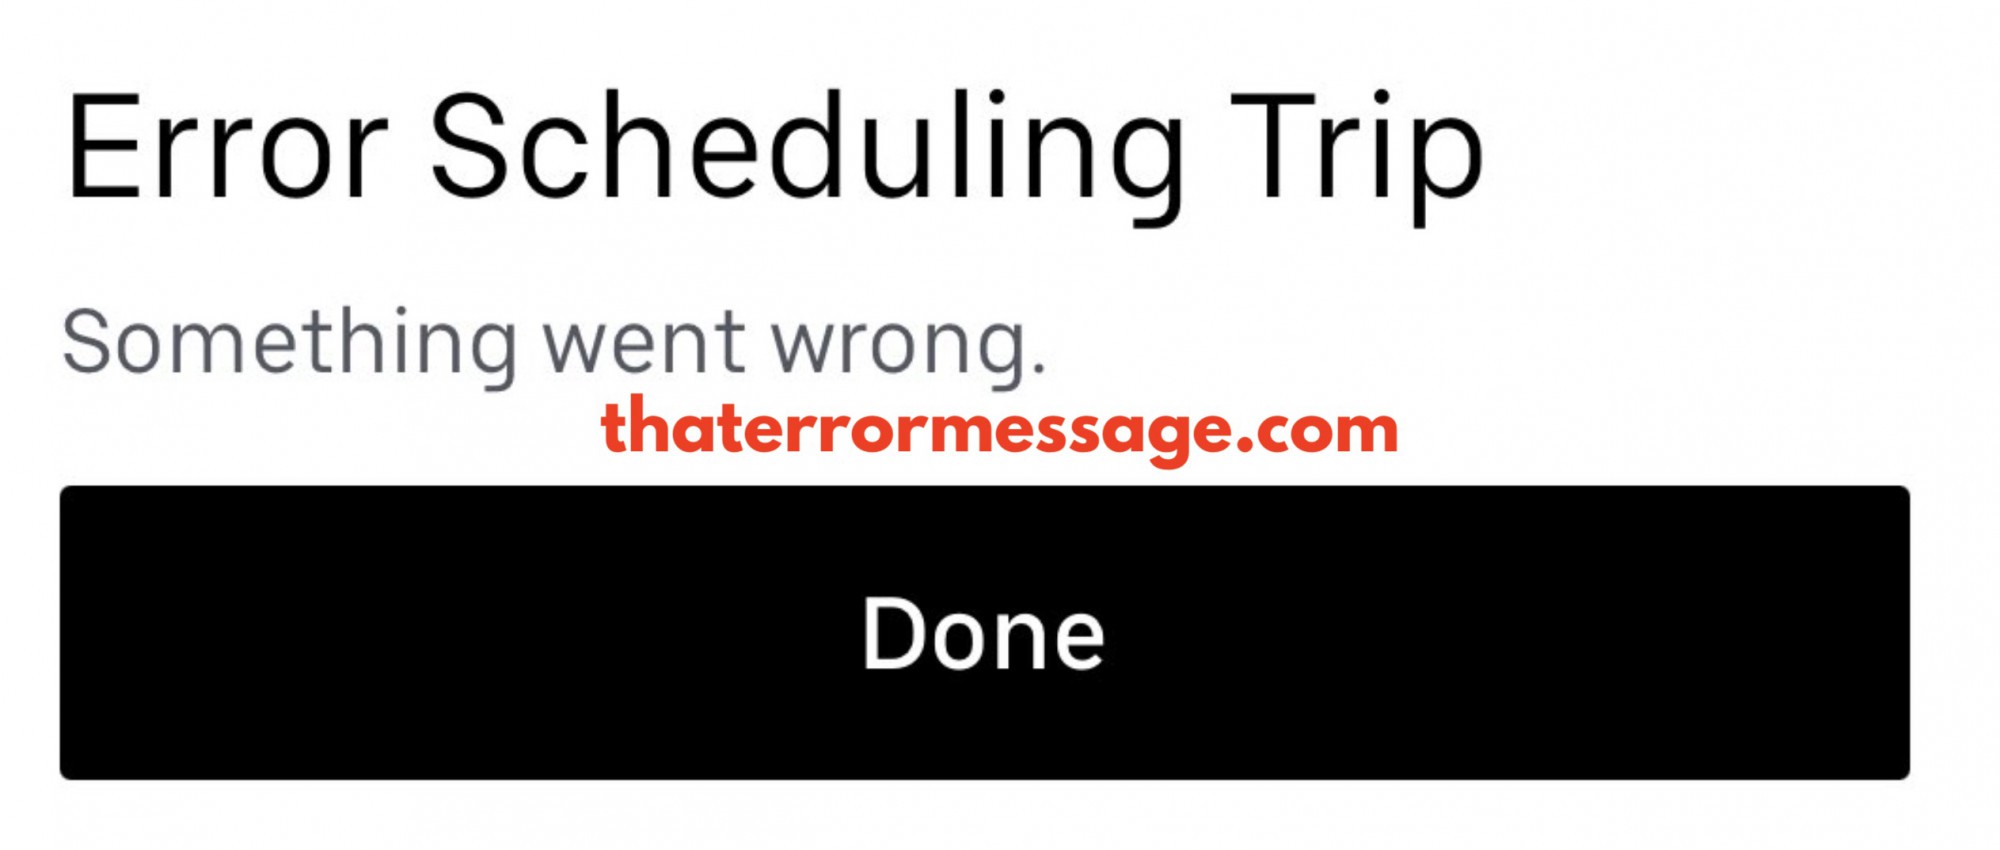 Error Scheduling Trip Uber